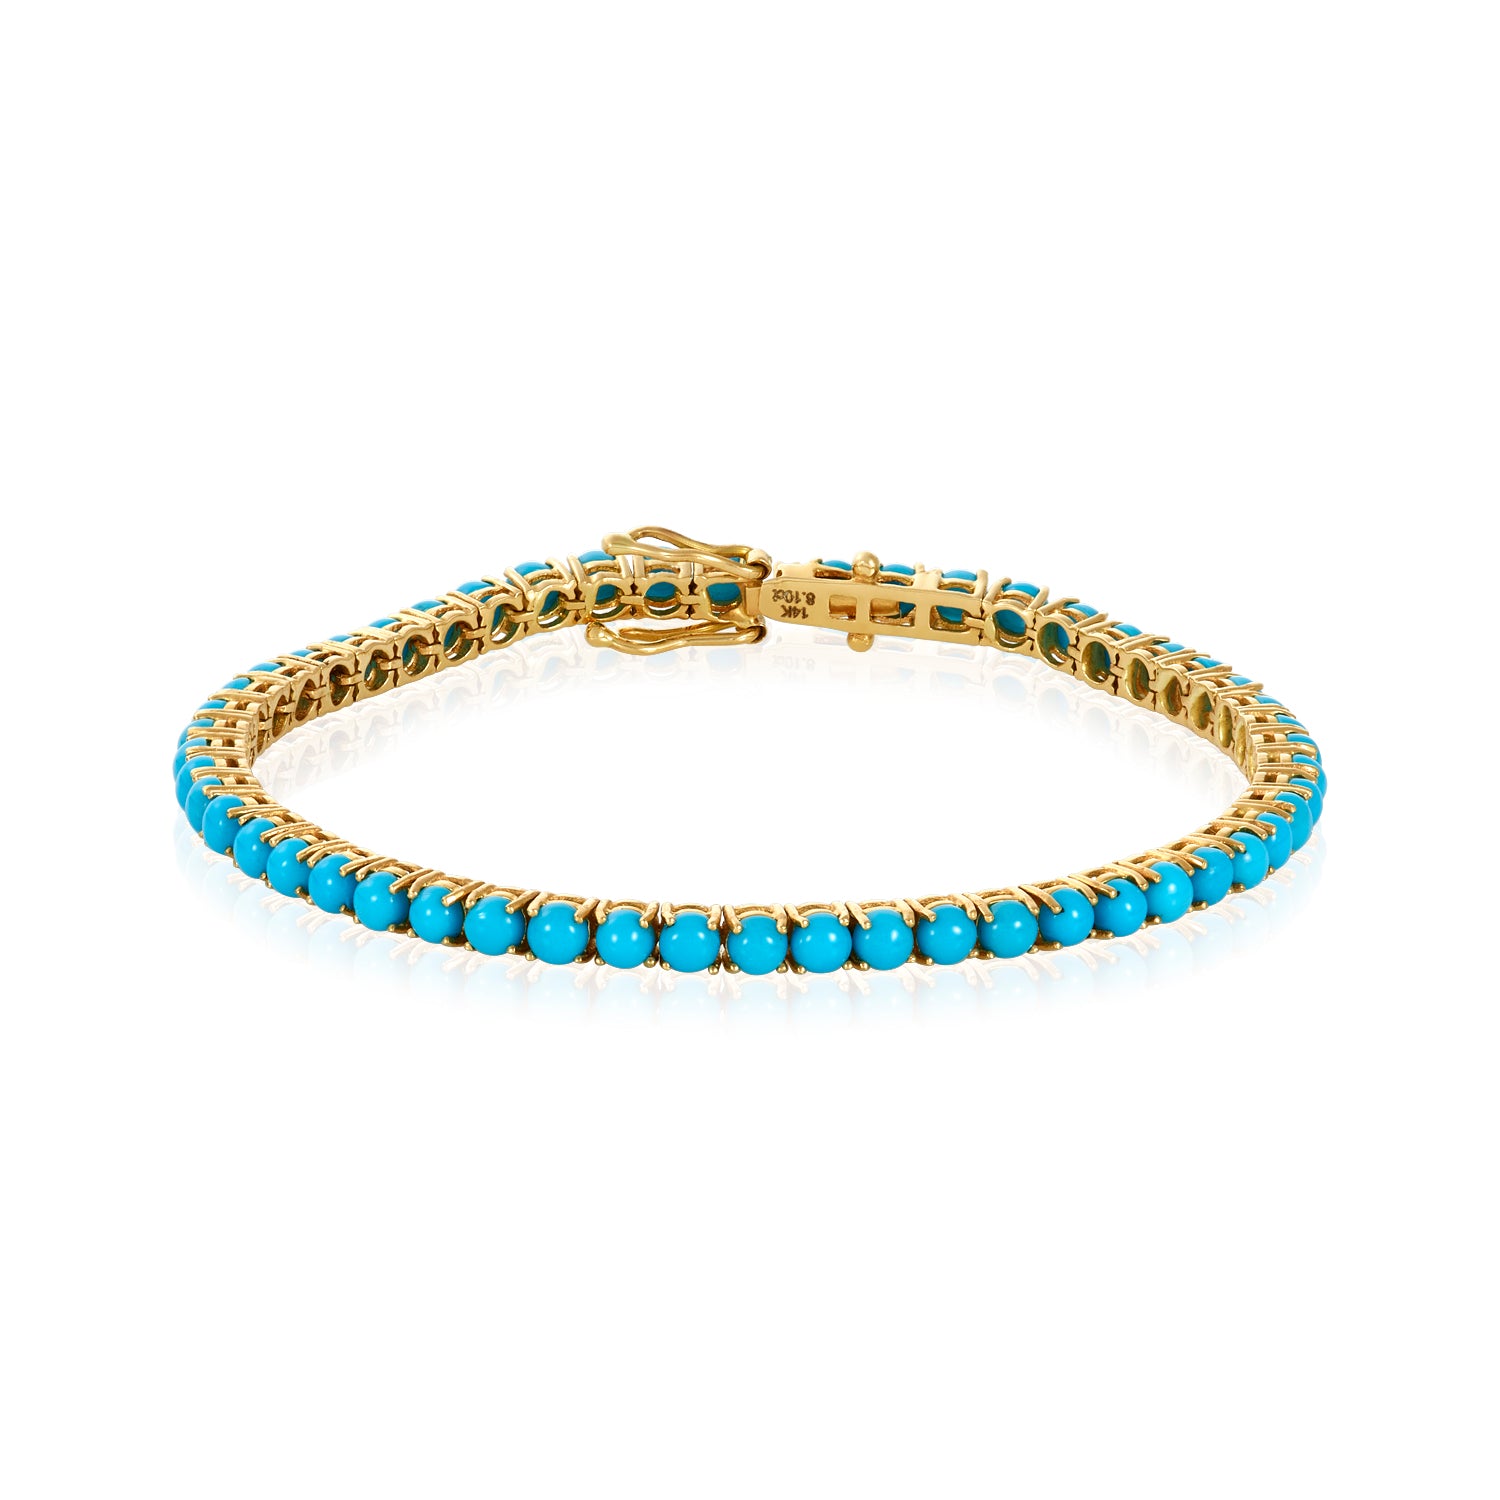 Buy Latest Designs of Bracelets for Women & Girls Online at Mabel